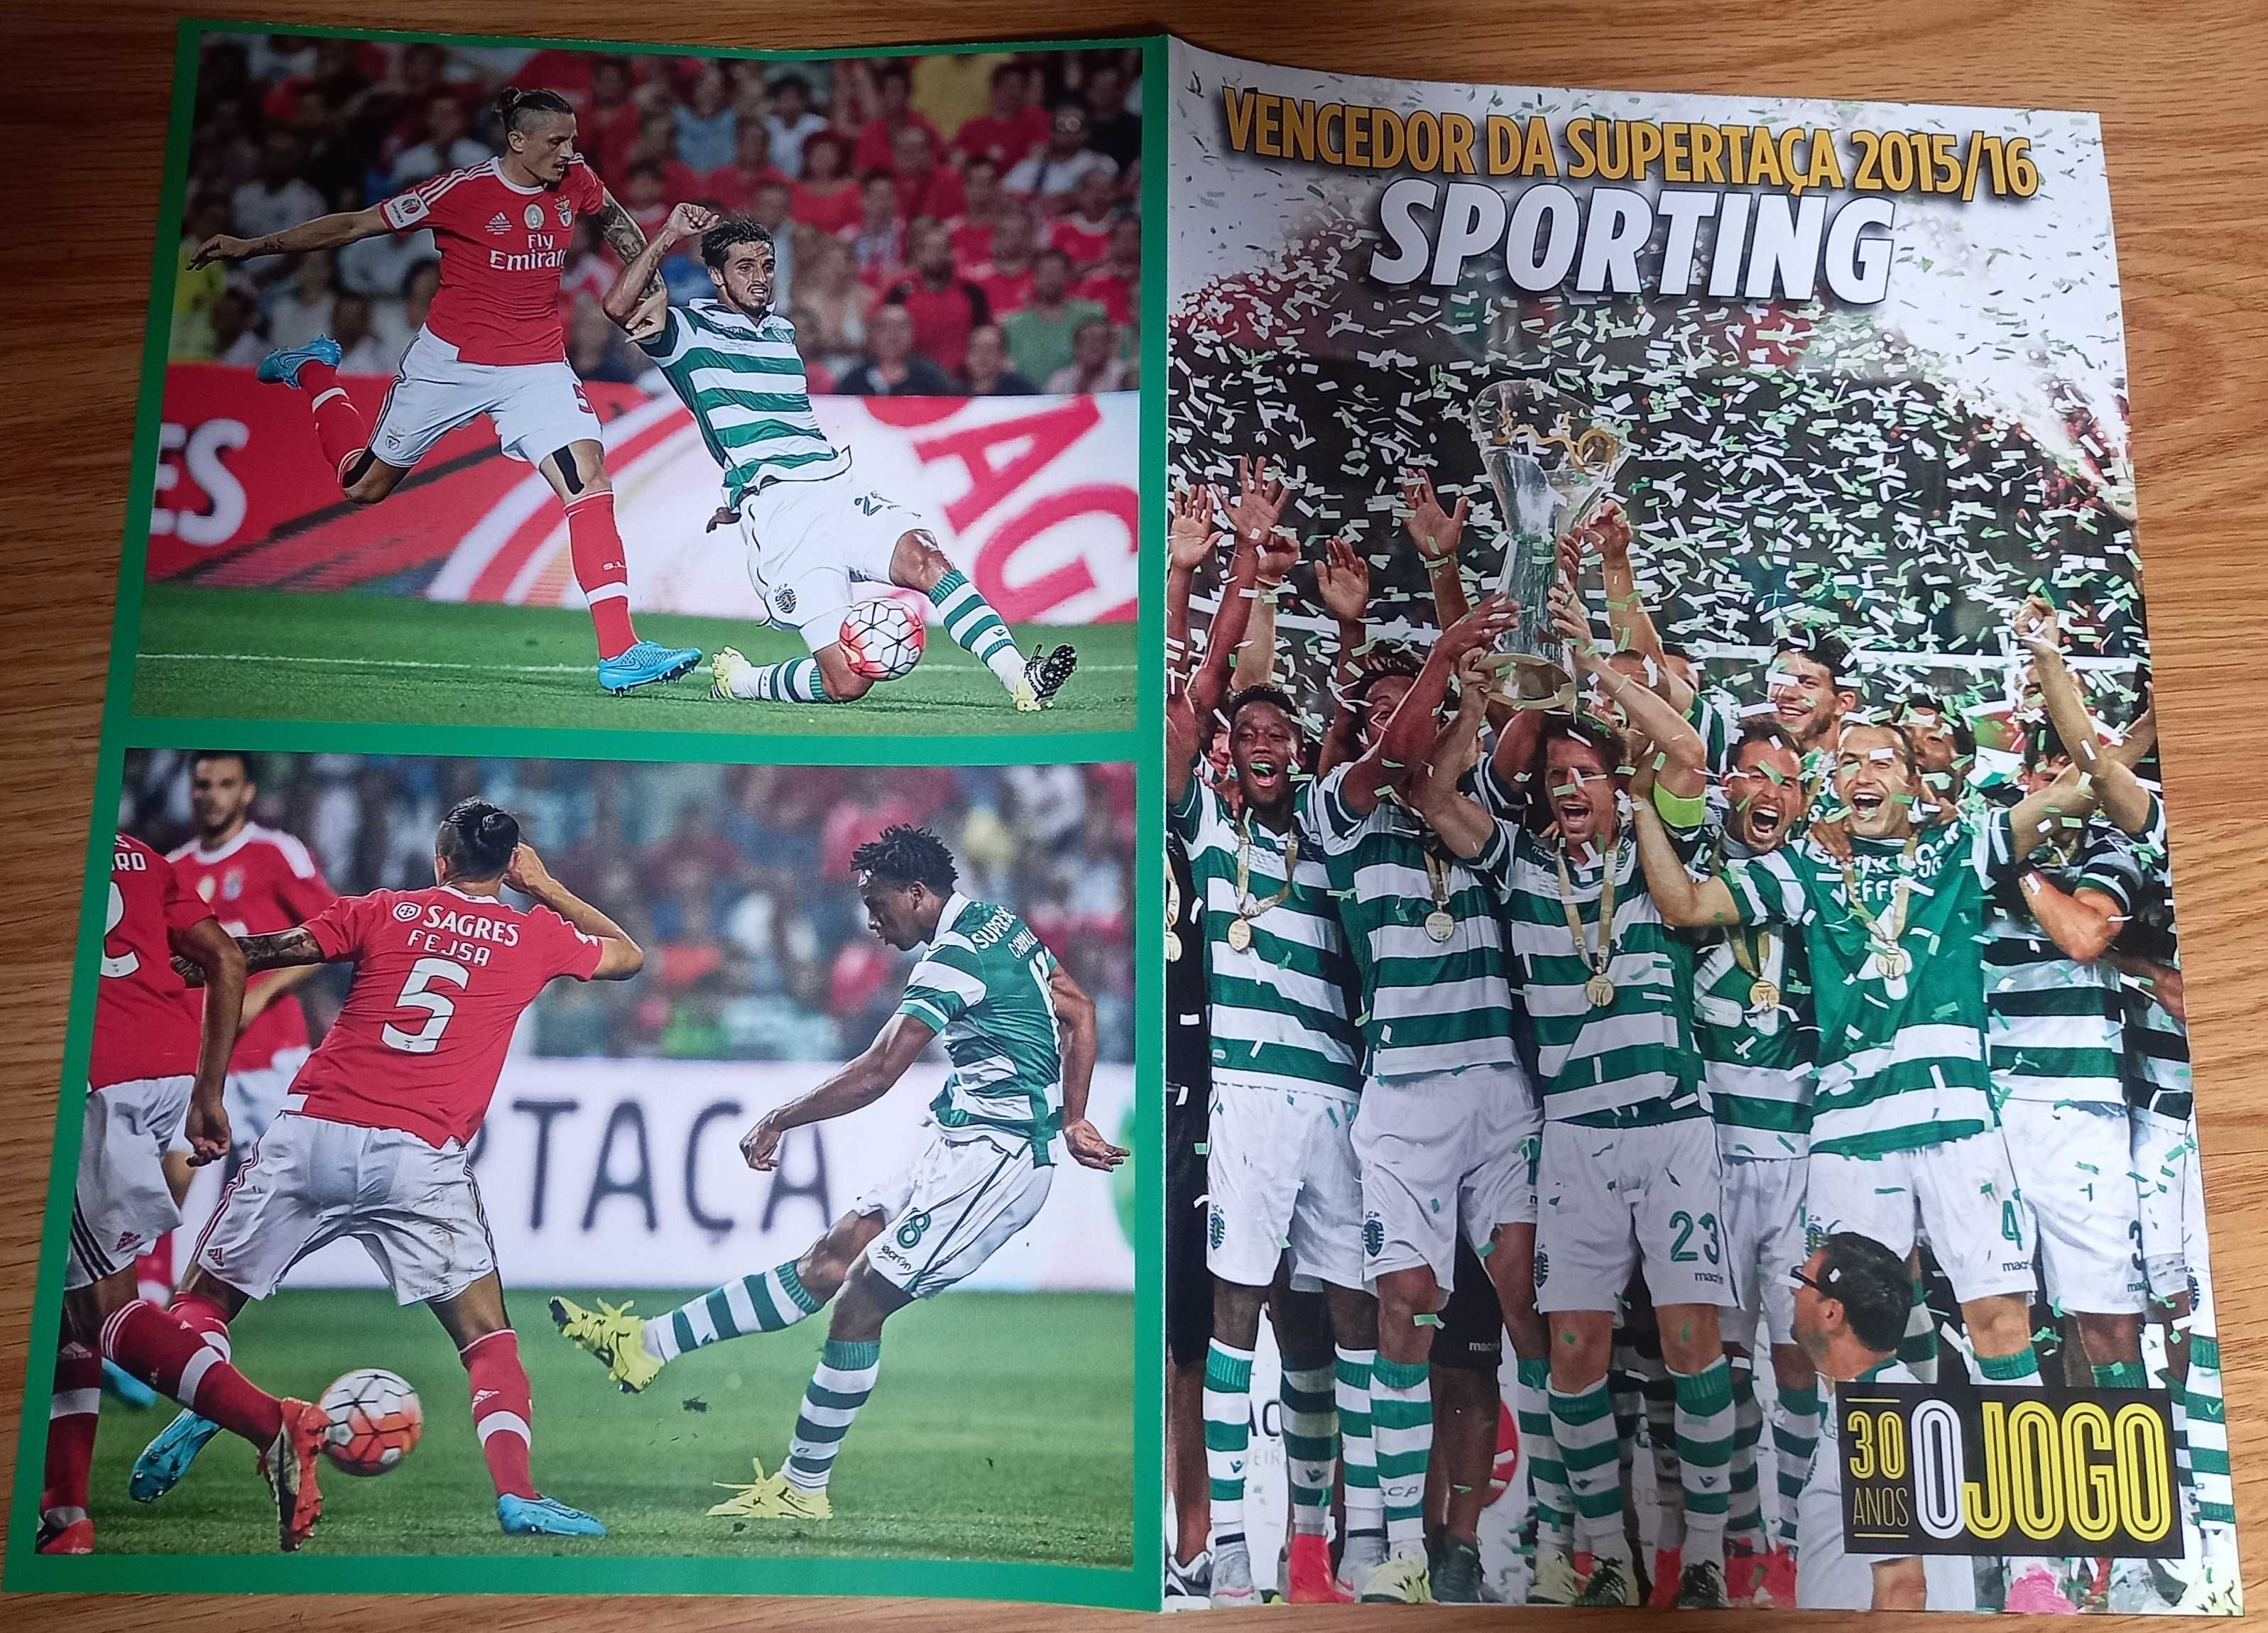 2 Posters Supertaça 15/16 Sporting